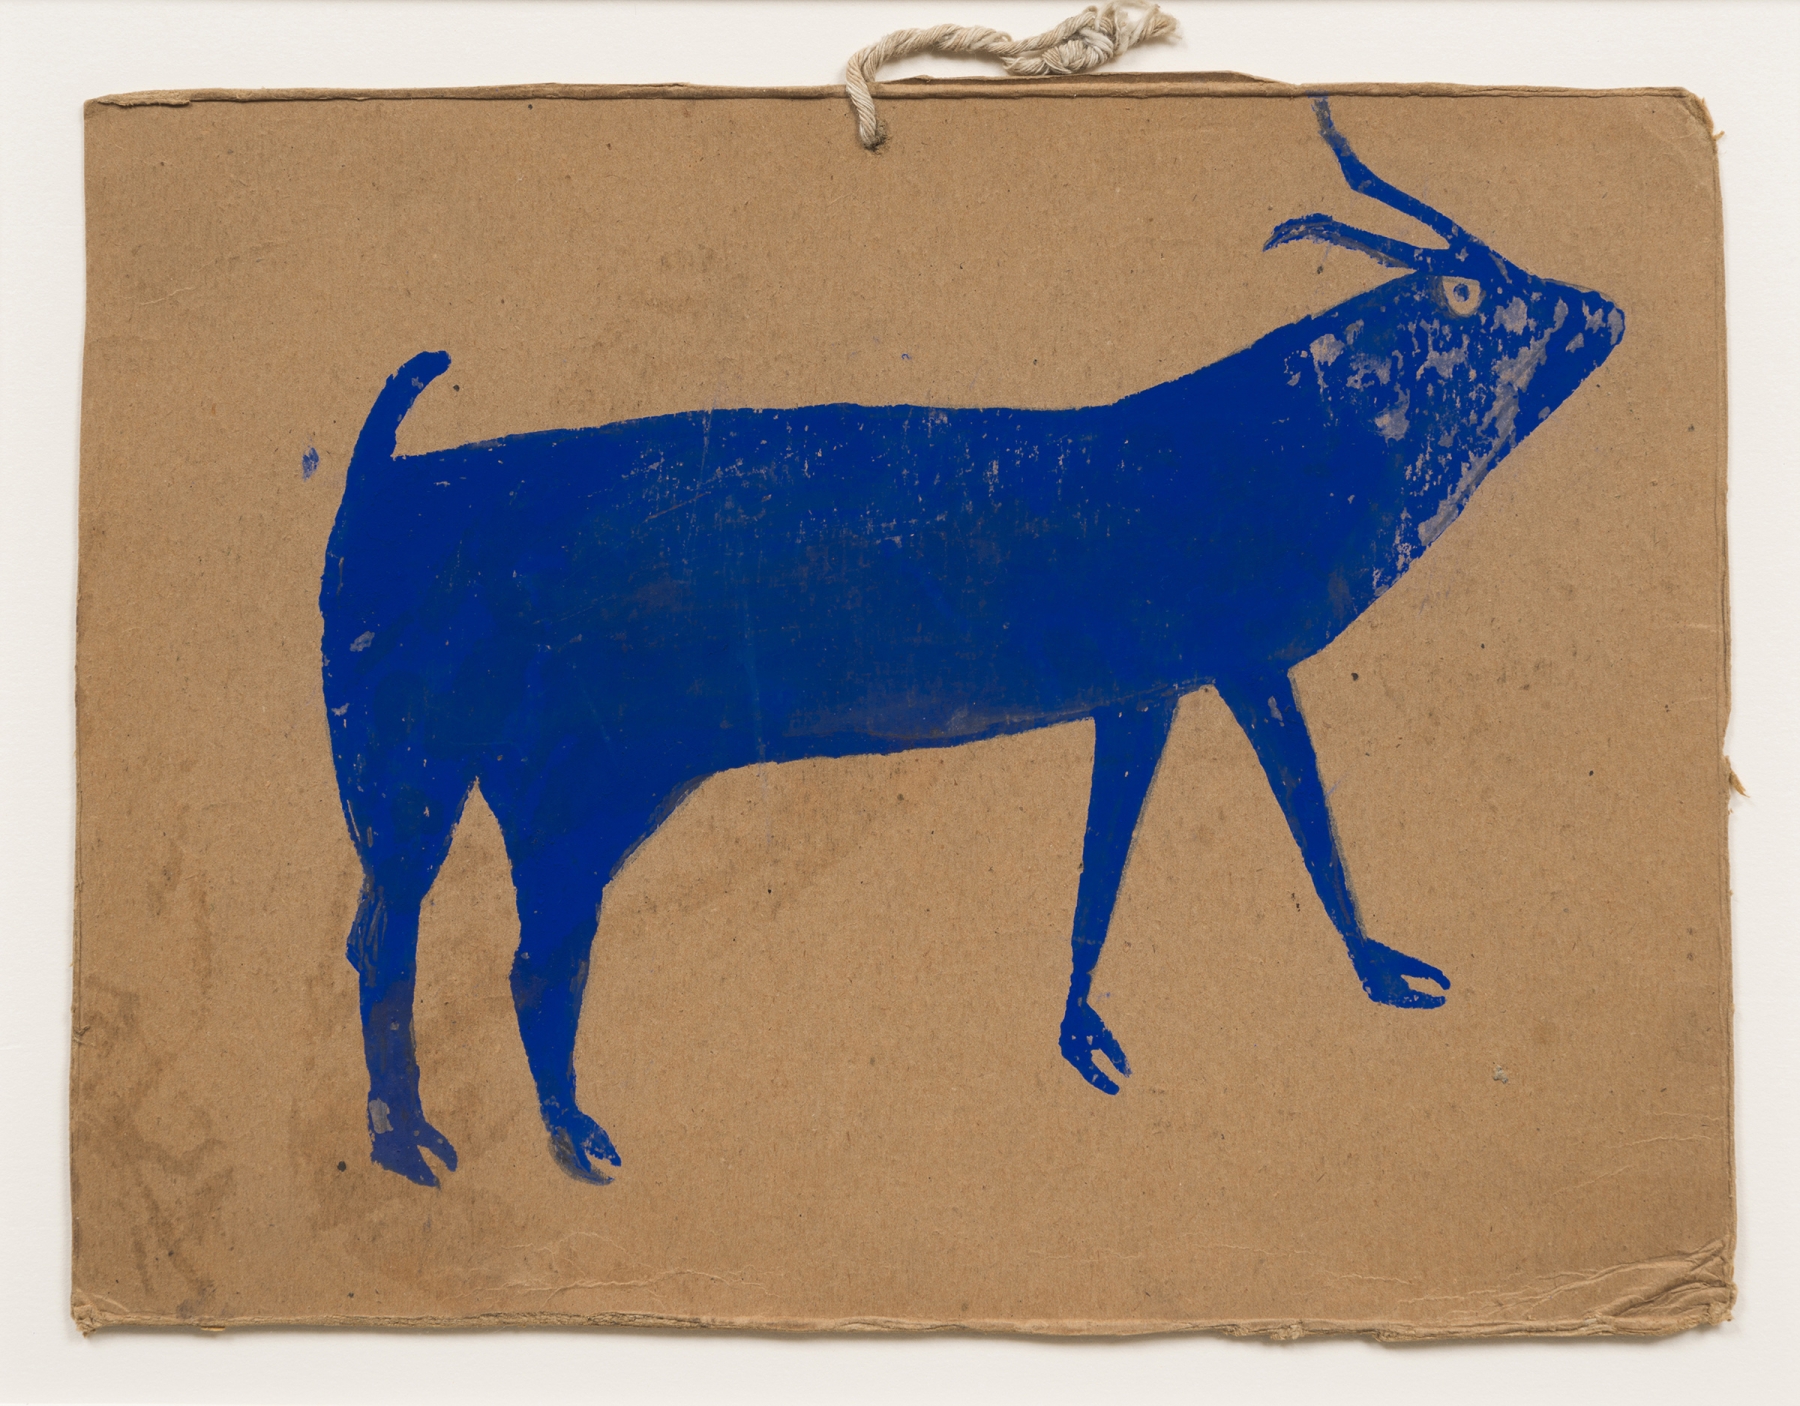 Bill Traylor,&amp;nbsp;Spiritual Blue Goat, 1939&amp;ndash;42;&amp;nbsp;poster paint on cardboard,&amp;nbsp;9h x 12w in/&amp;nbsp;22.86h x 30.48w cm

Inquire